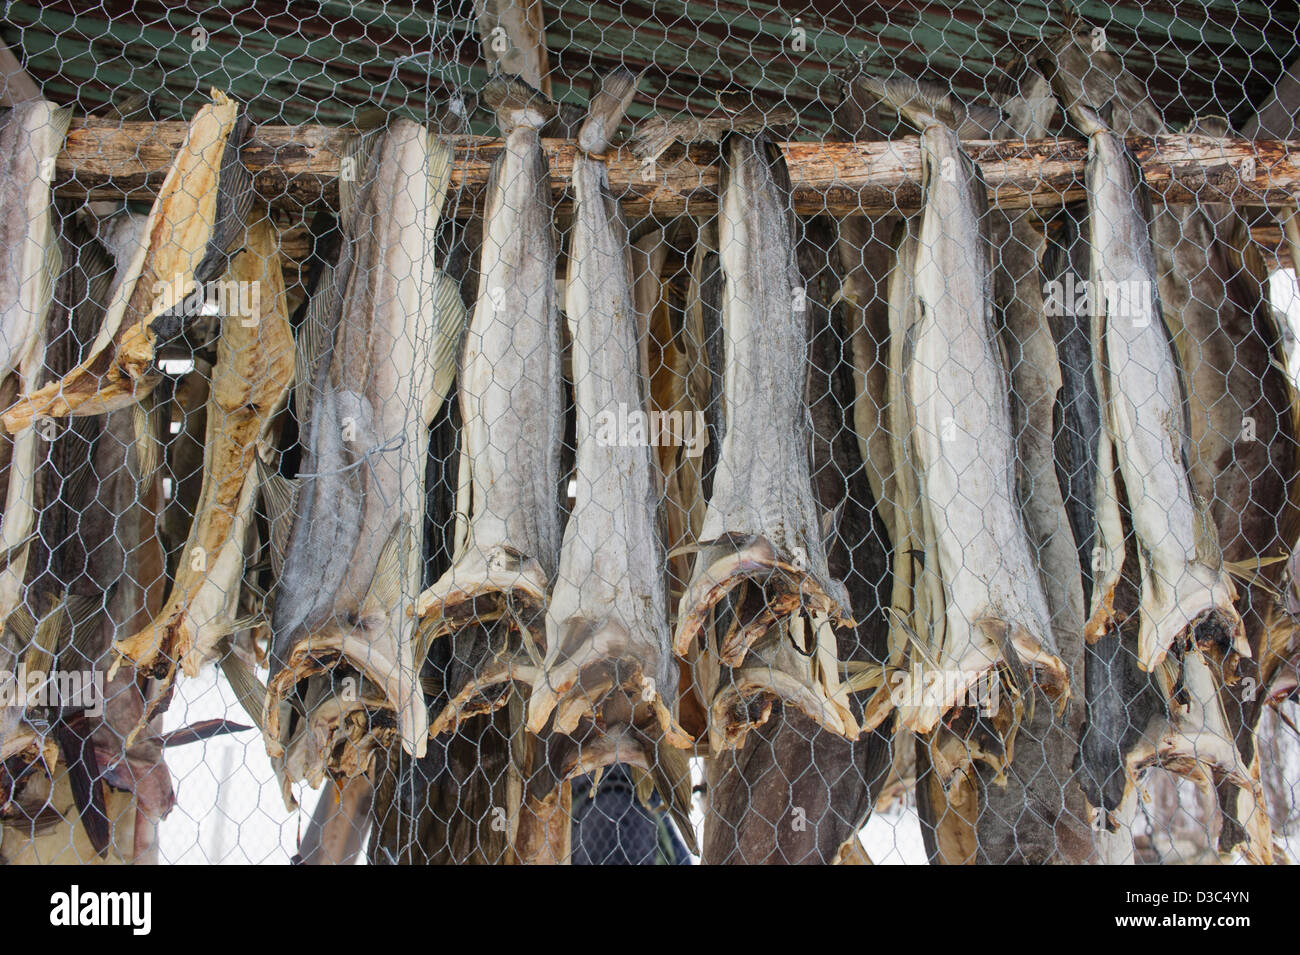 Norwegian stock fish - dried Cod — Bon Food